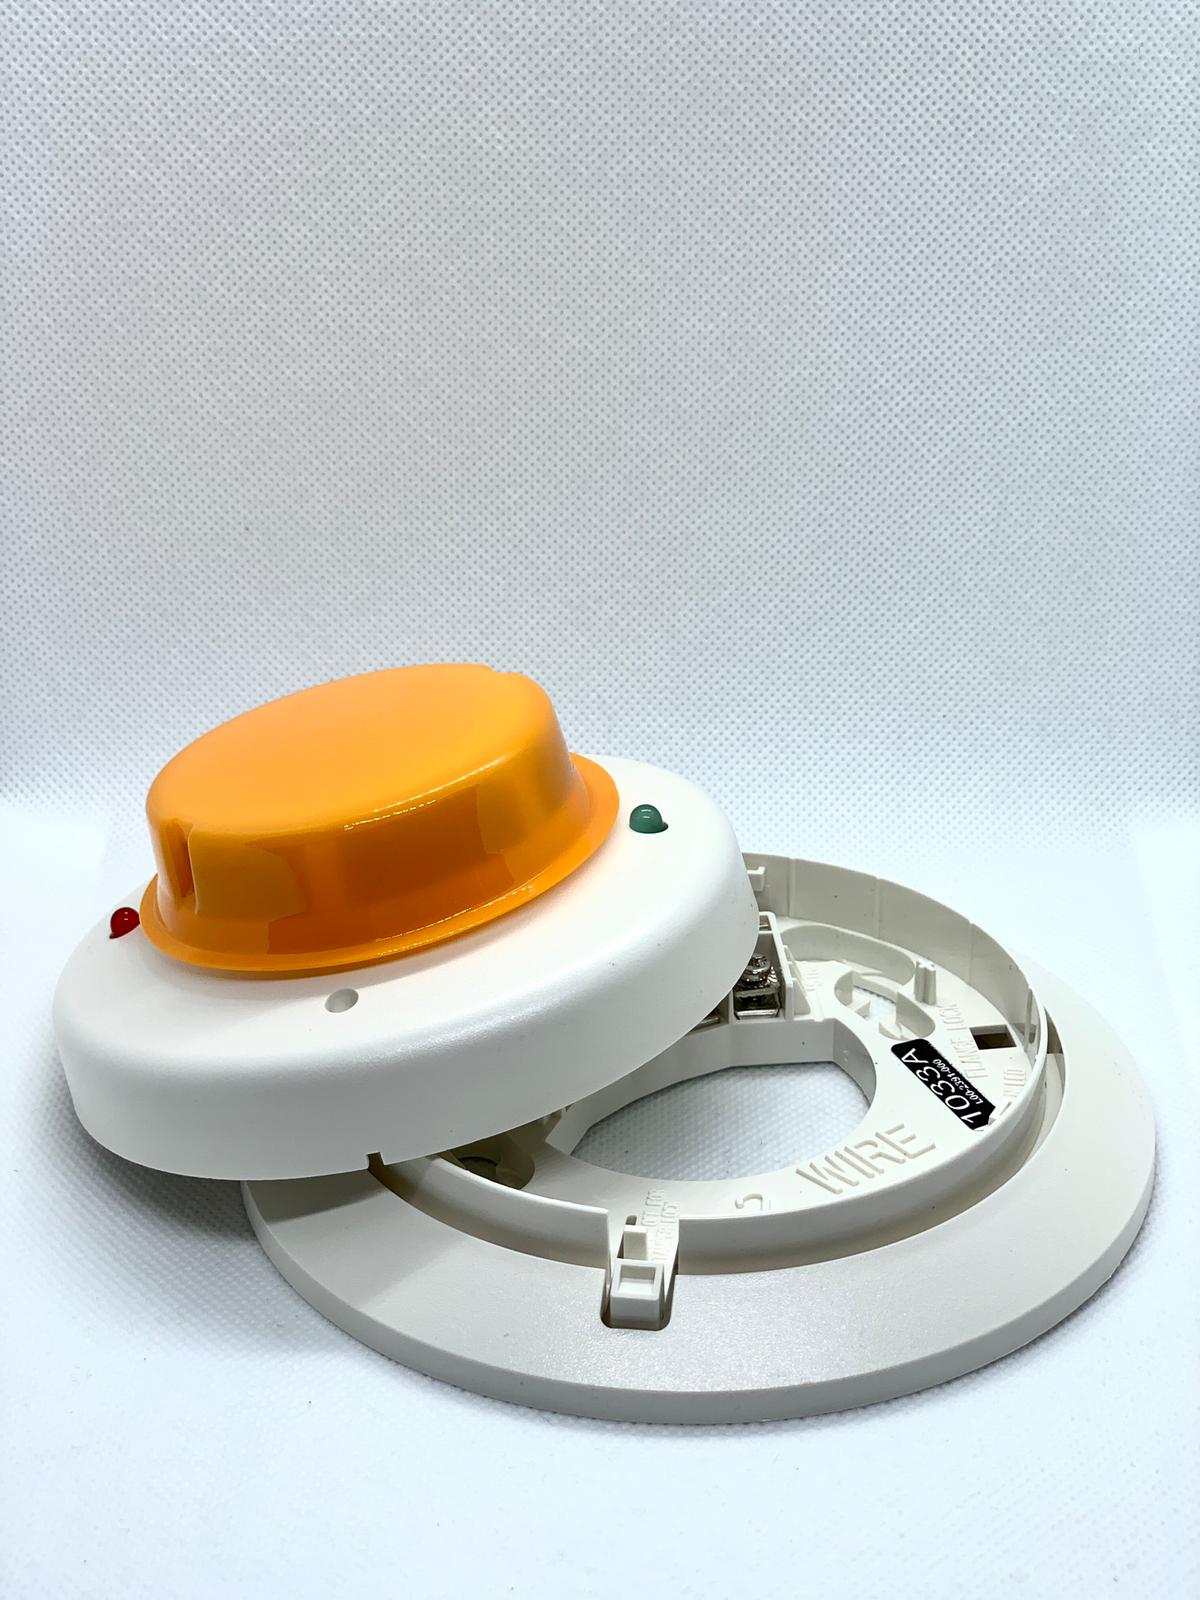 System Sensor 2WT-B - The Fire Alarm Supplier